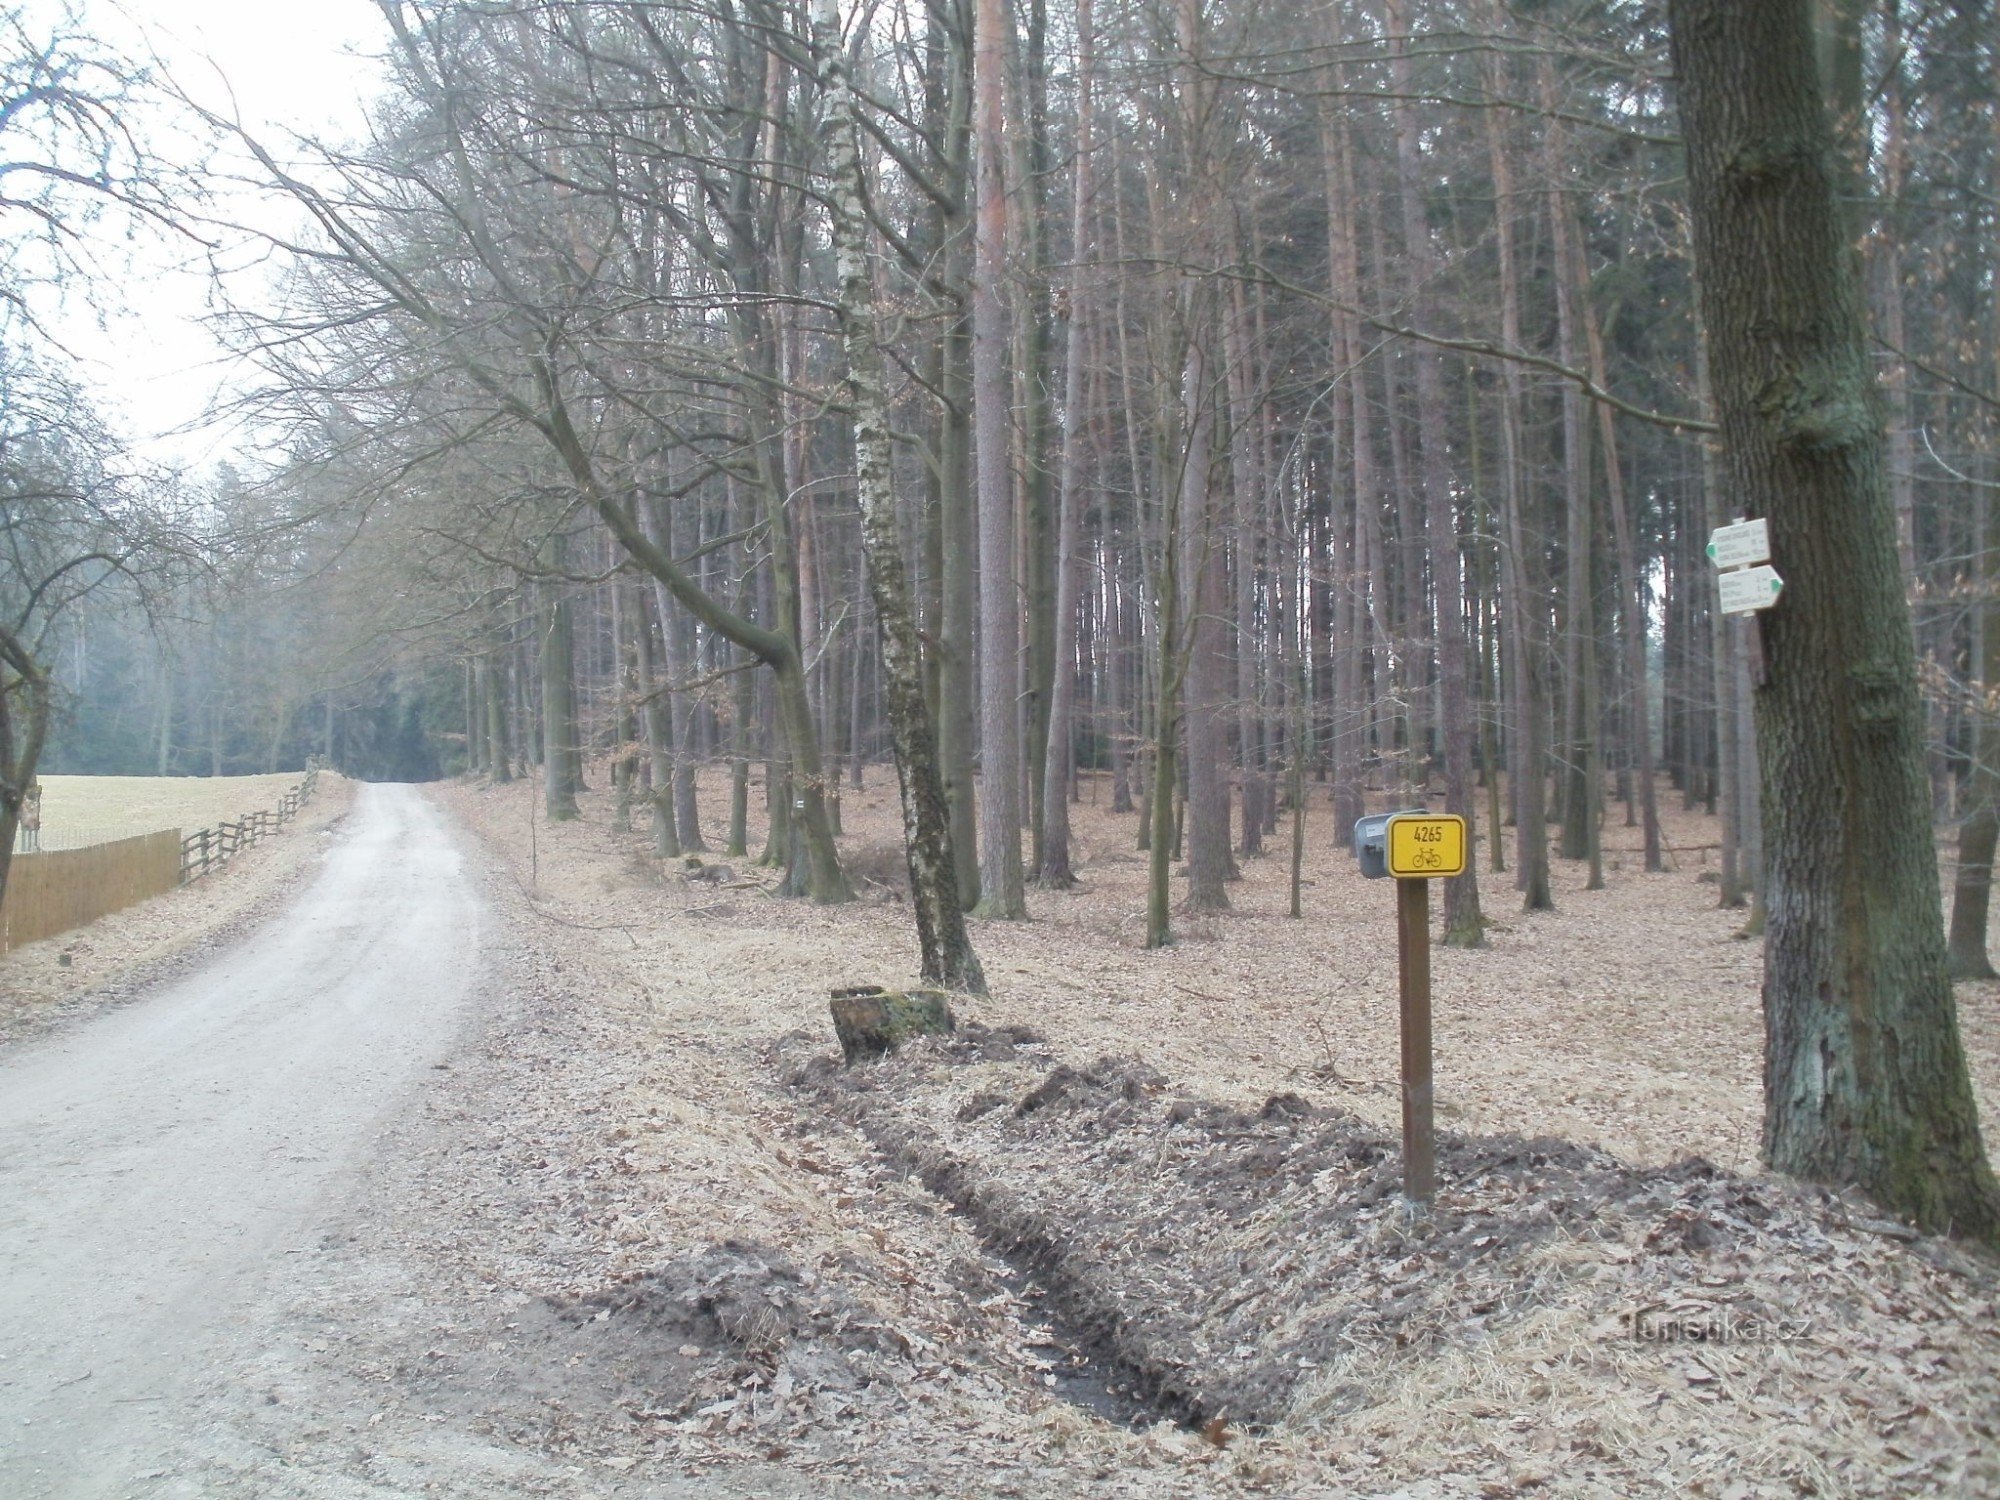 Touristische Kreuzung des Naturreservats Kindlovka